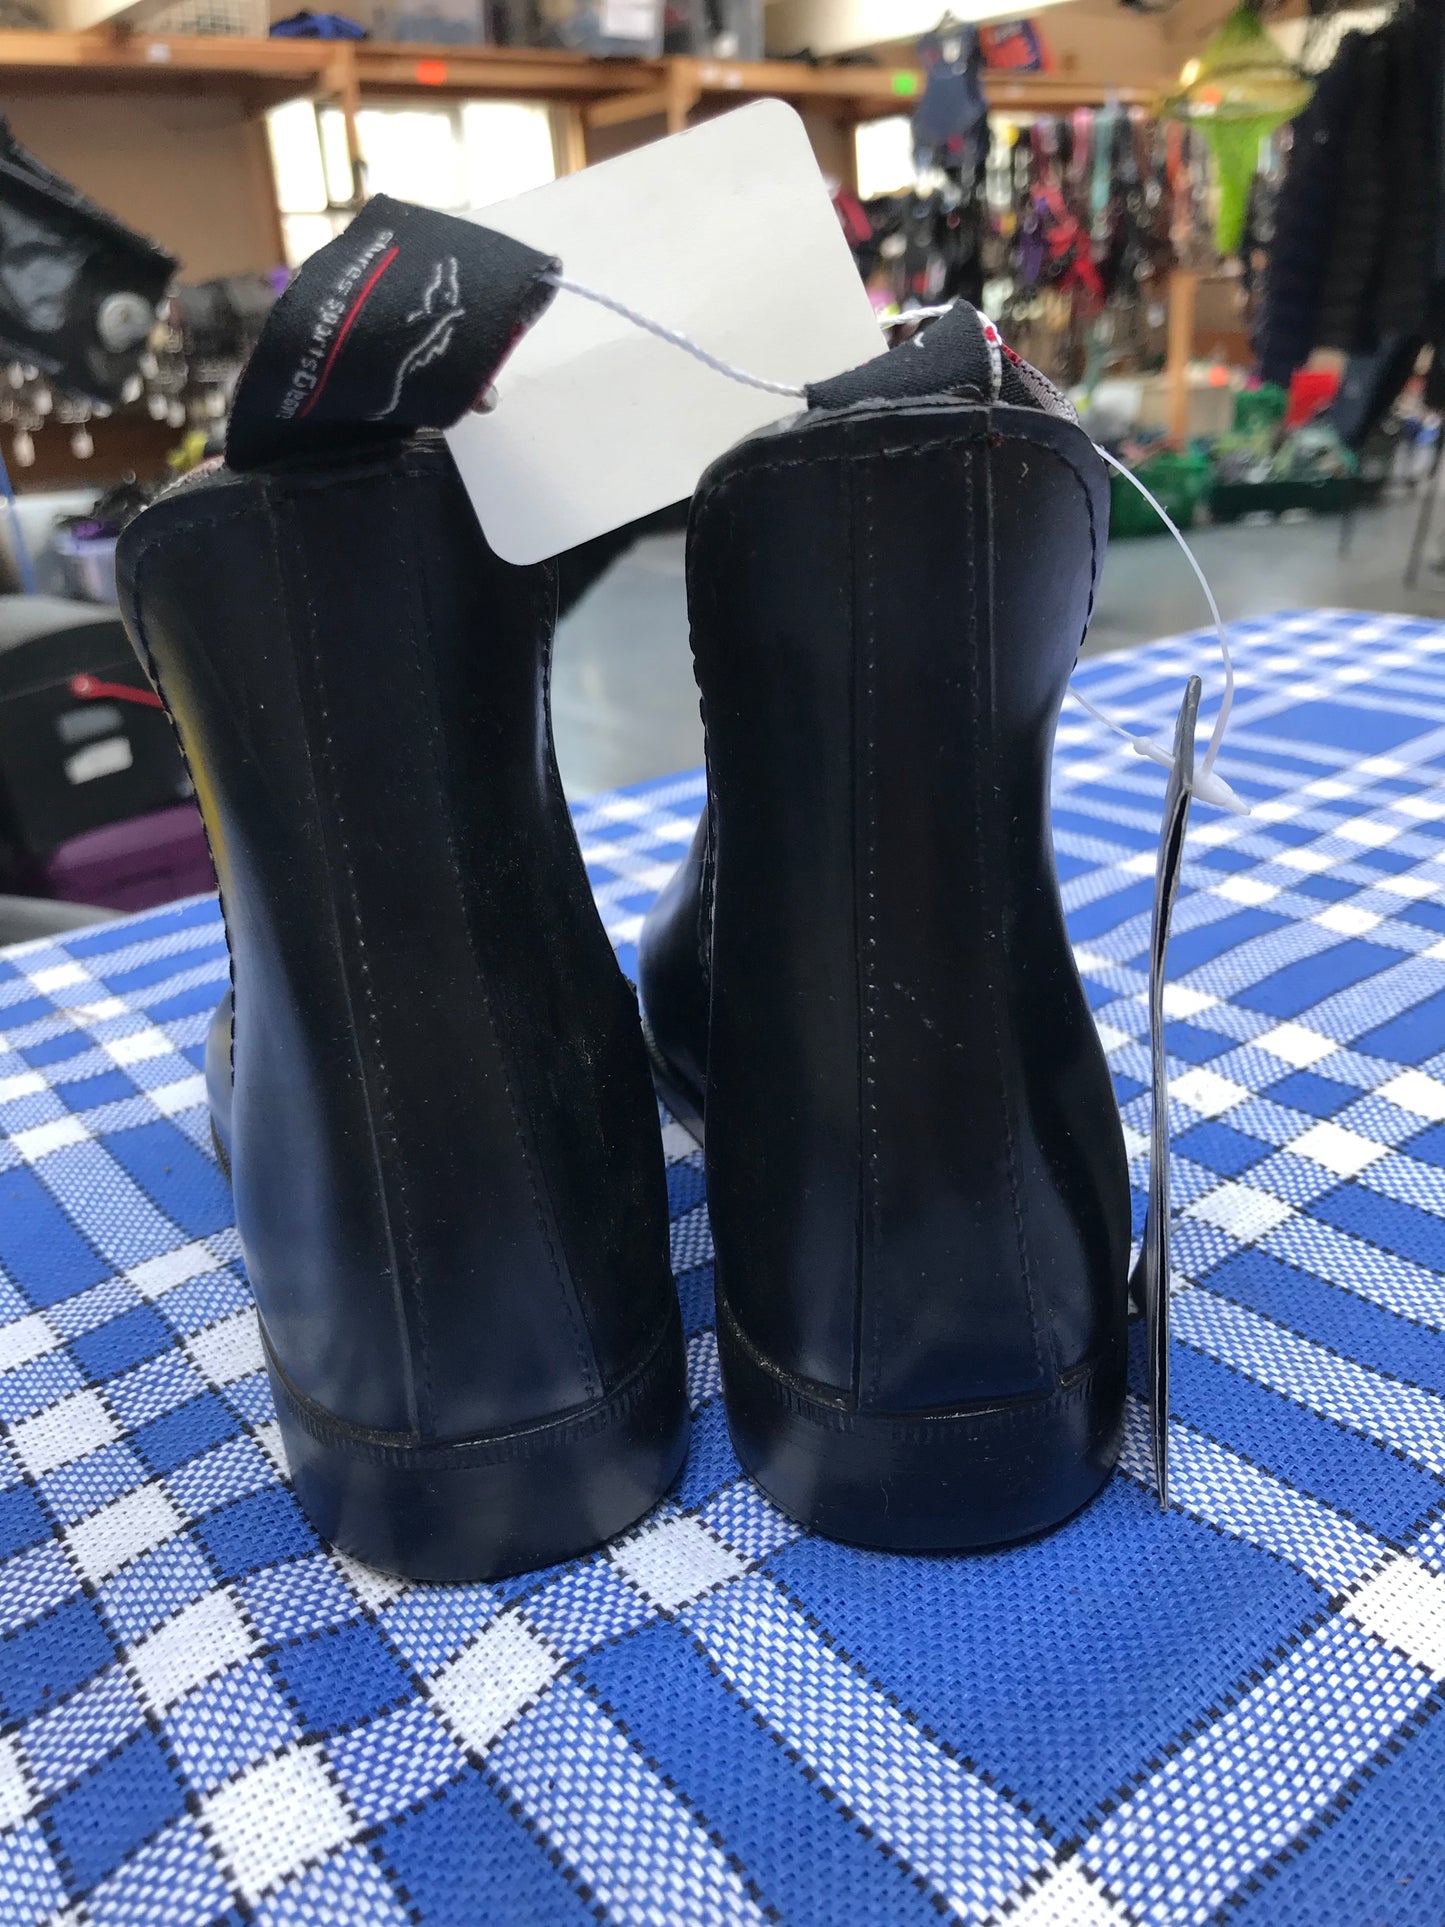 New shires black jodhpur boots children’s size 13 FREE POSTAGE*